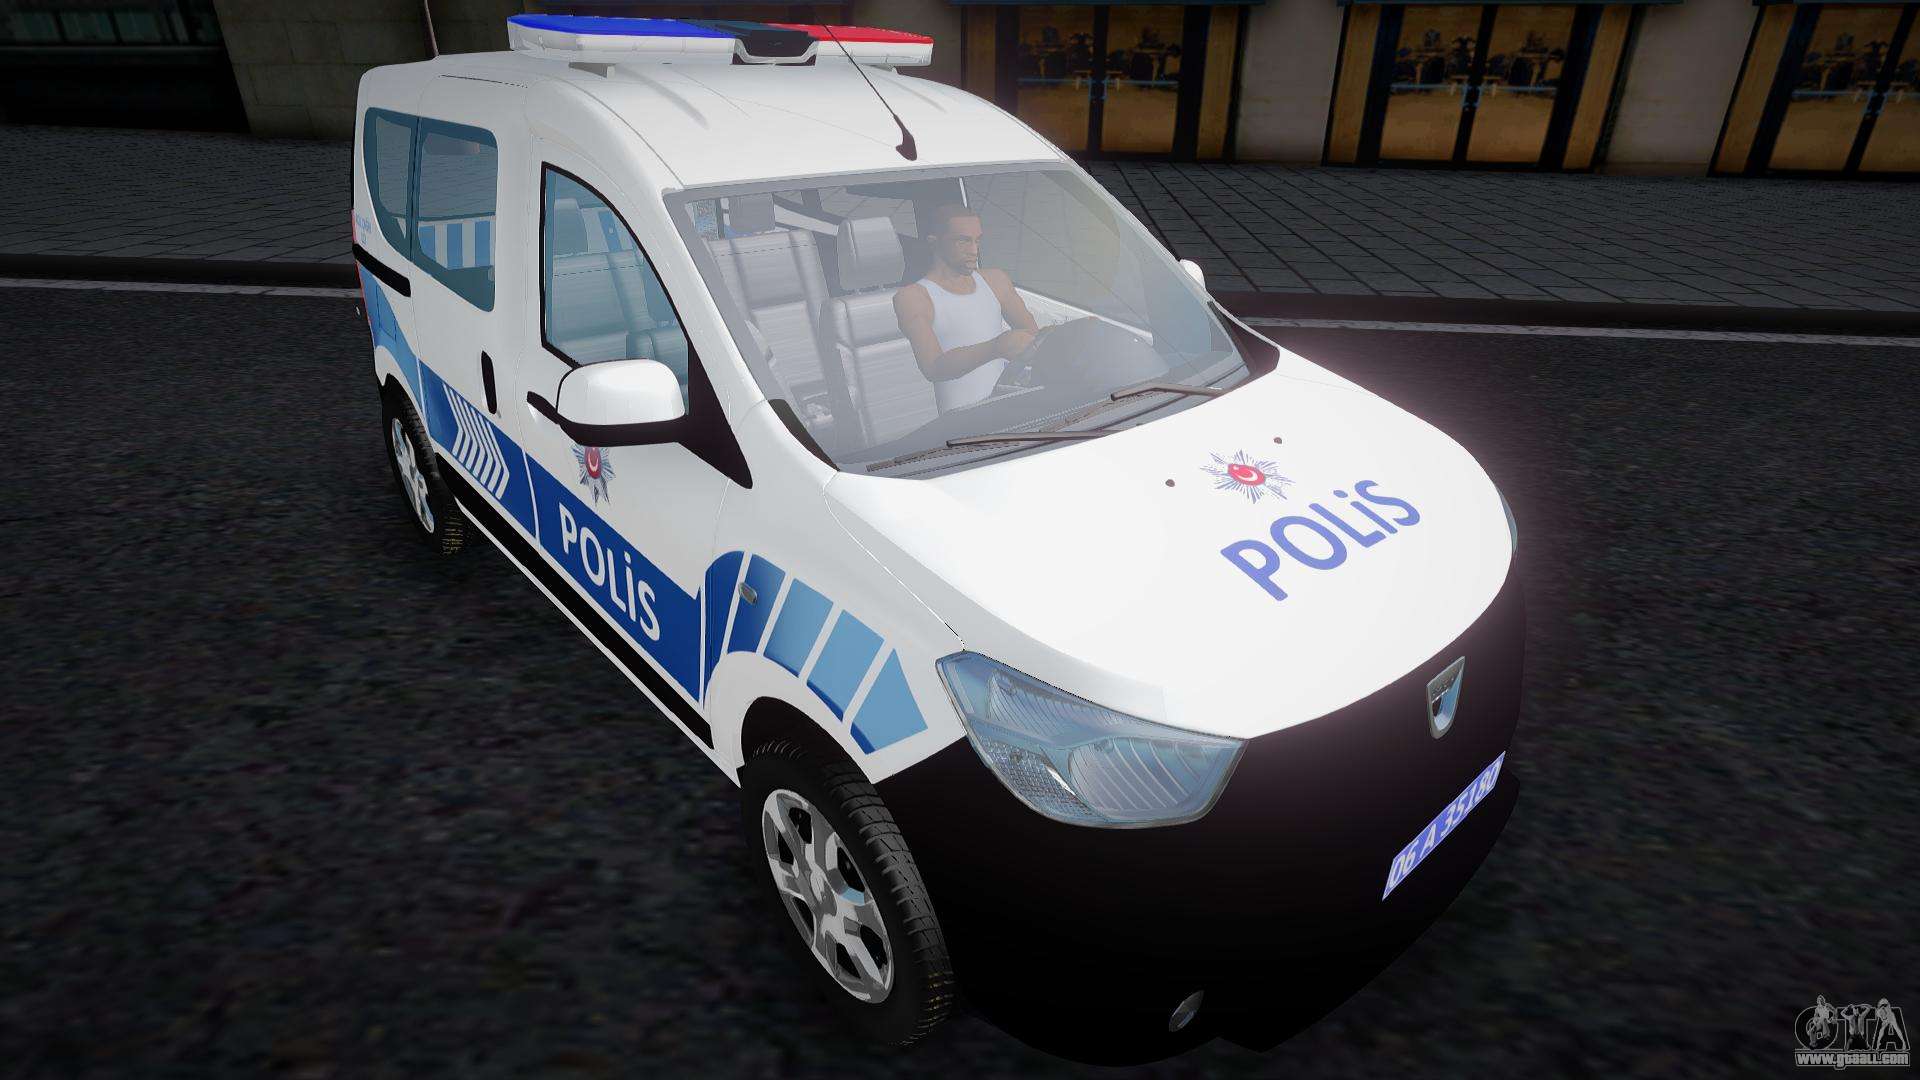 Dacia Dokker 1.5 Dci Ambiance Polis for GTA San Andreas